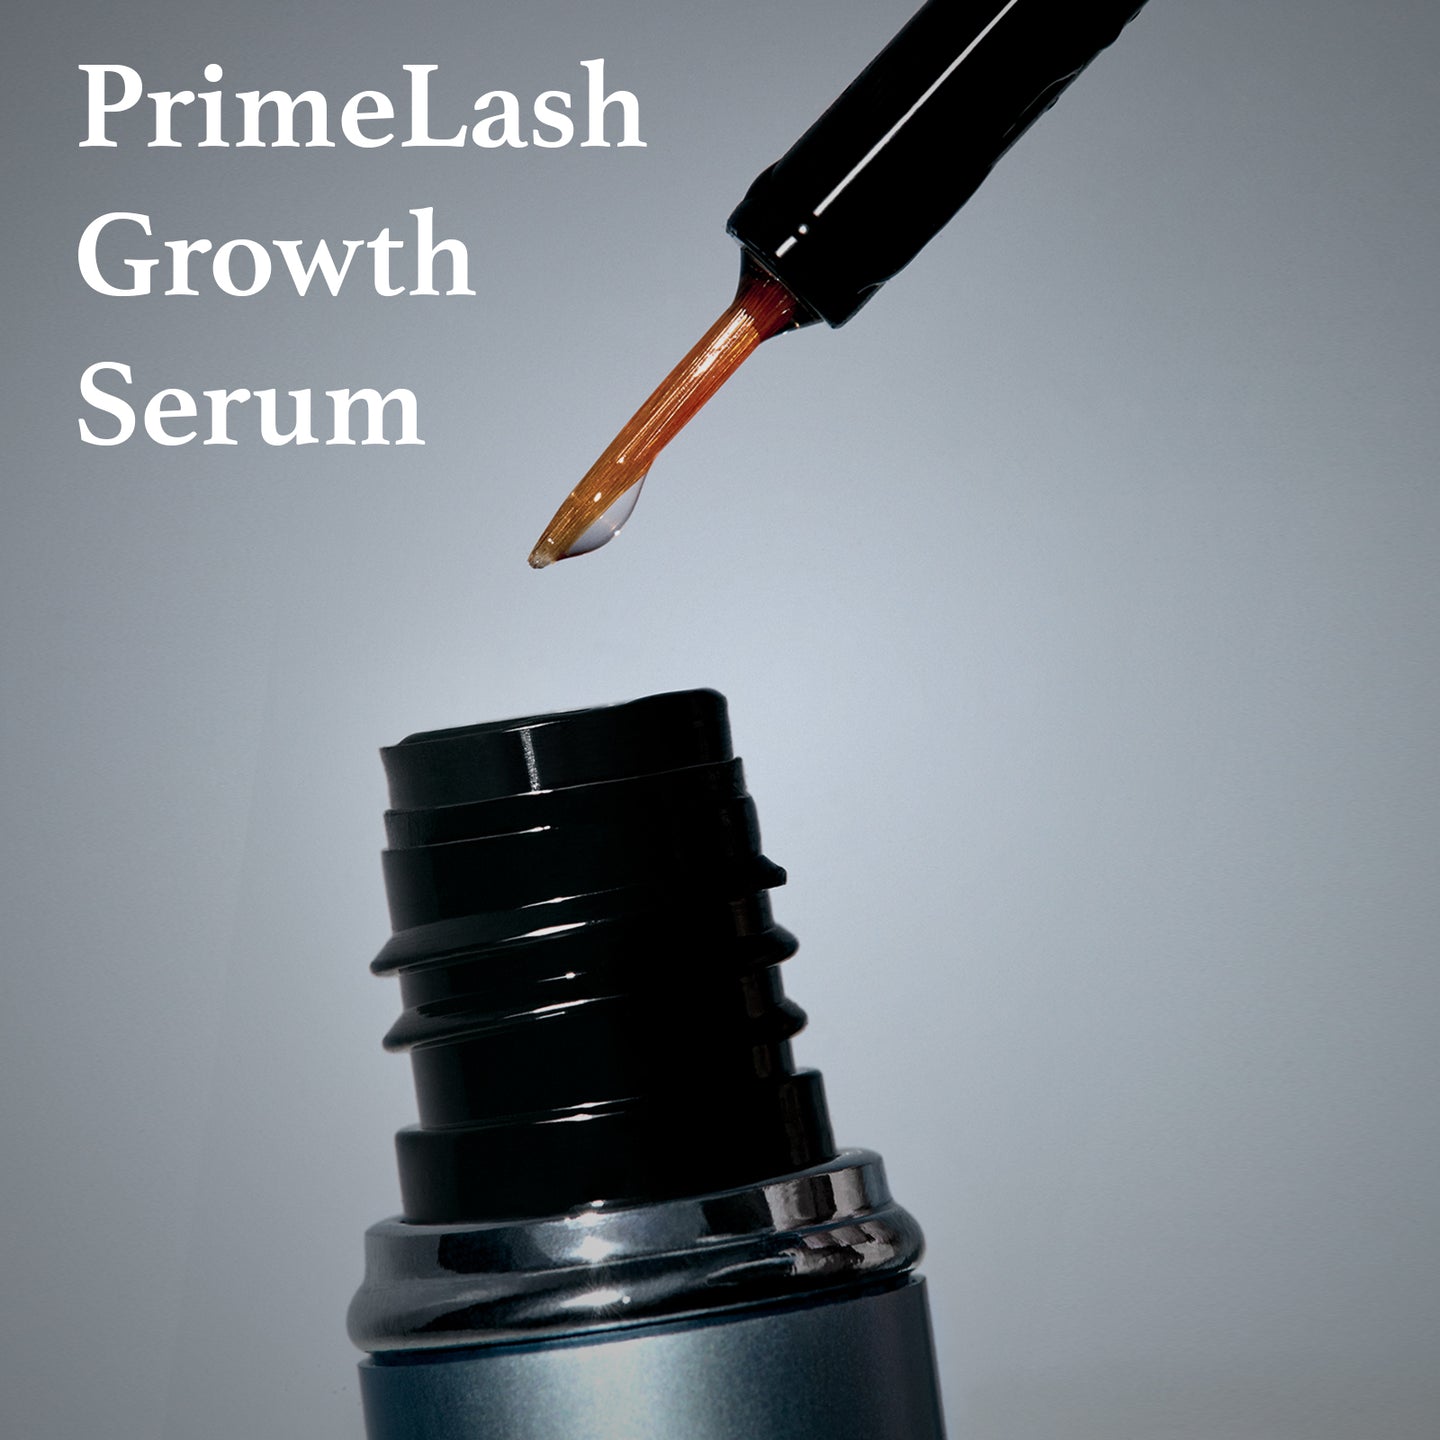 Limited Edition Eye Kit: PrimeLash Mascara + PrimeEyes Glide + PrimeLash Growth Serum